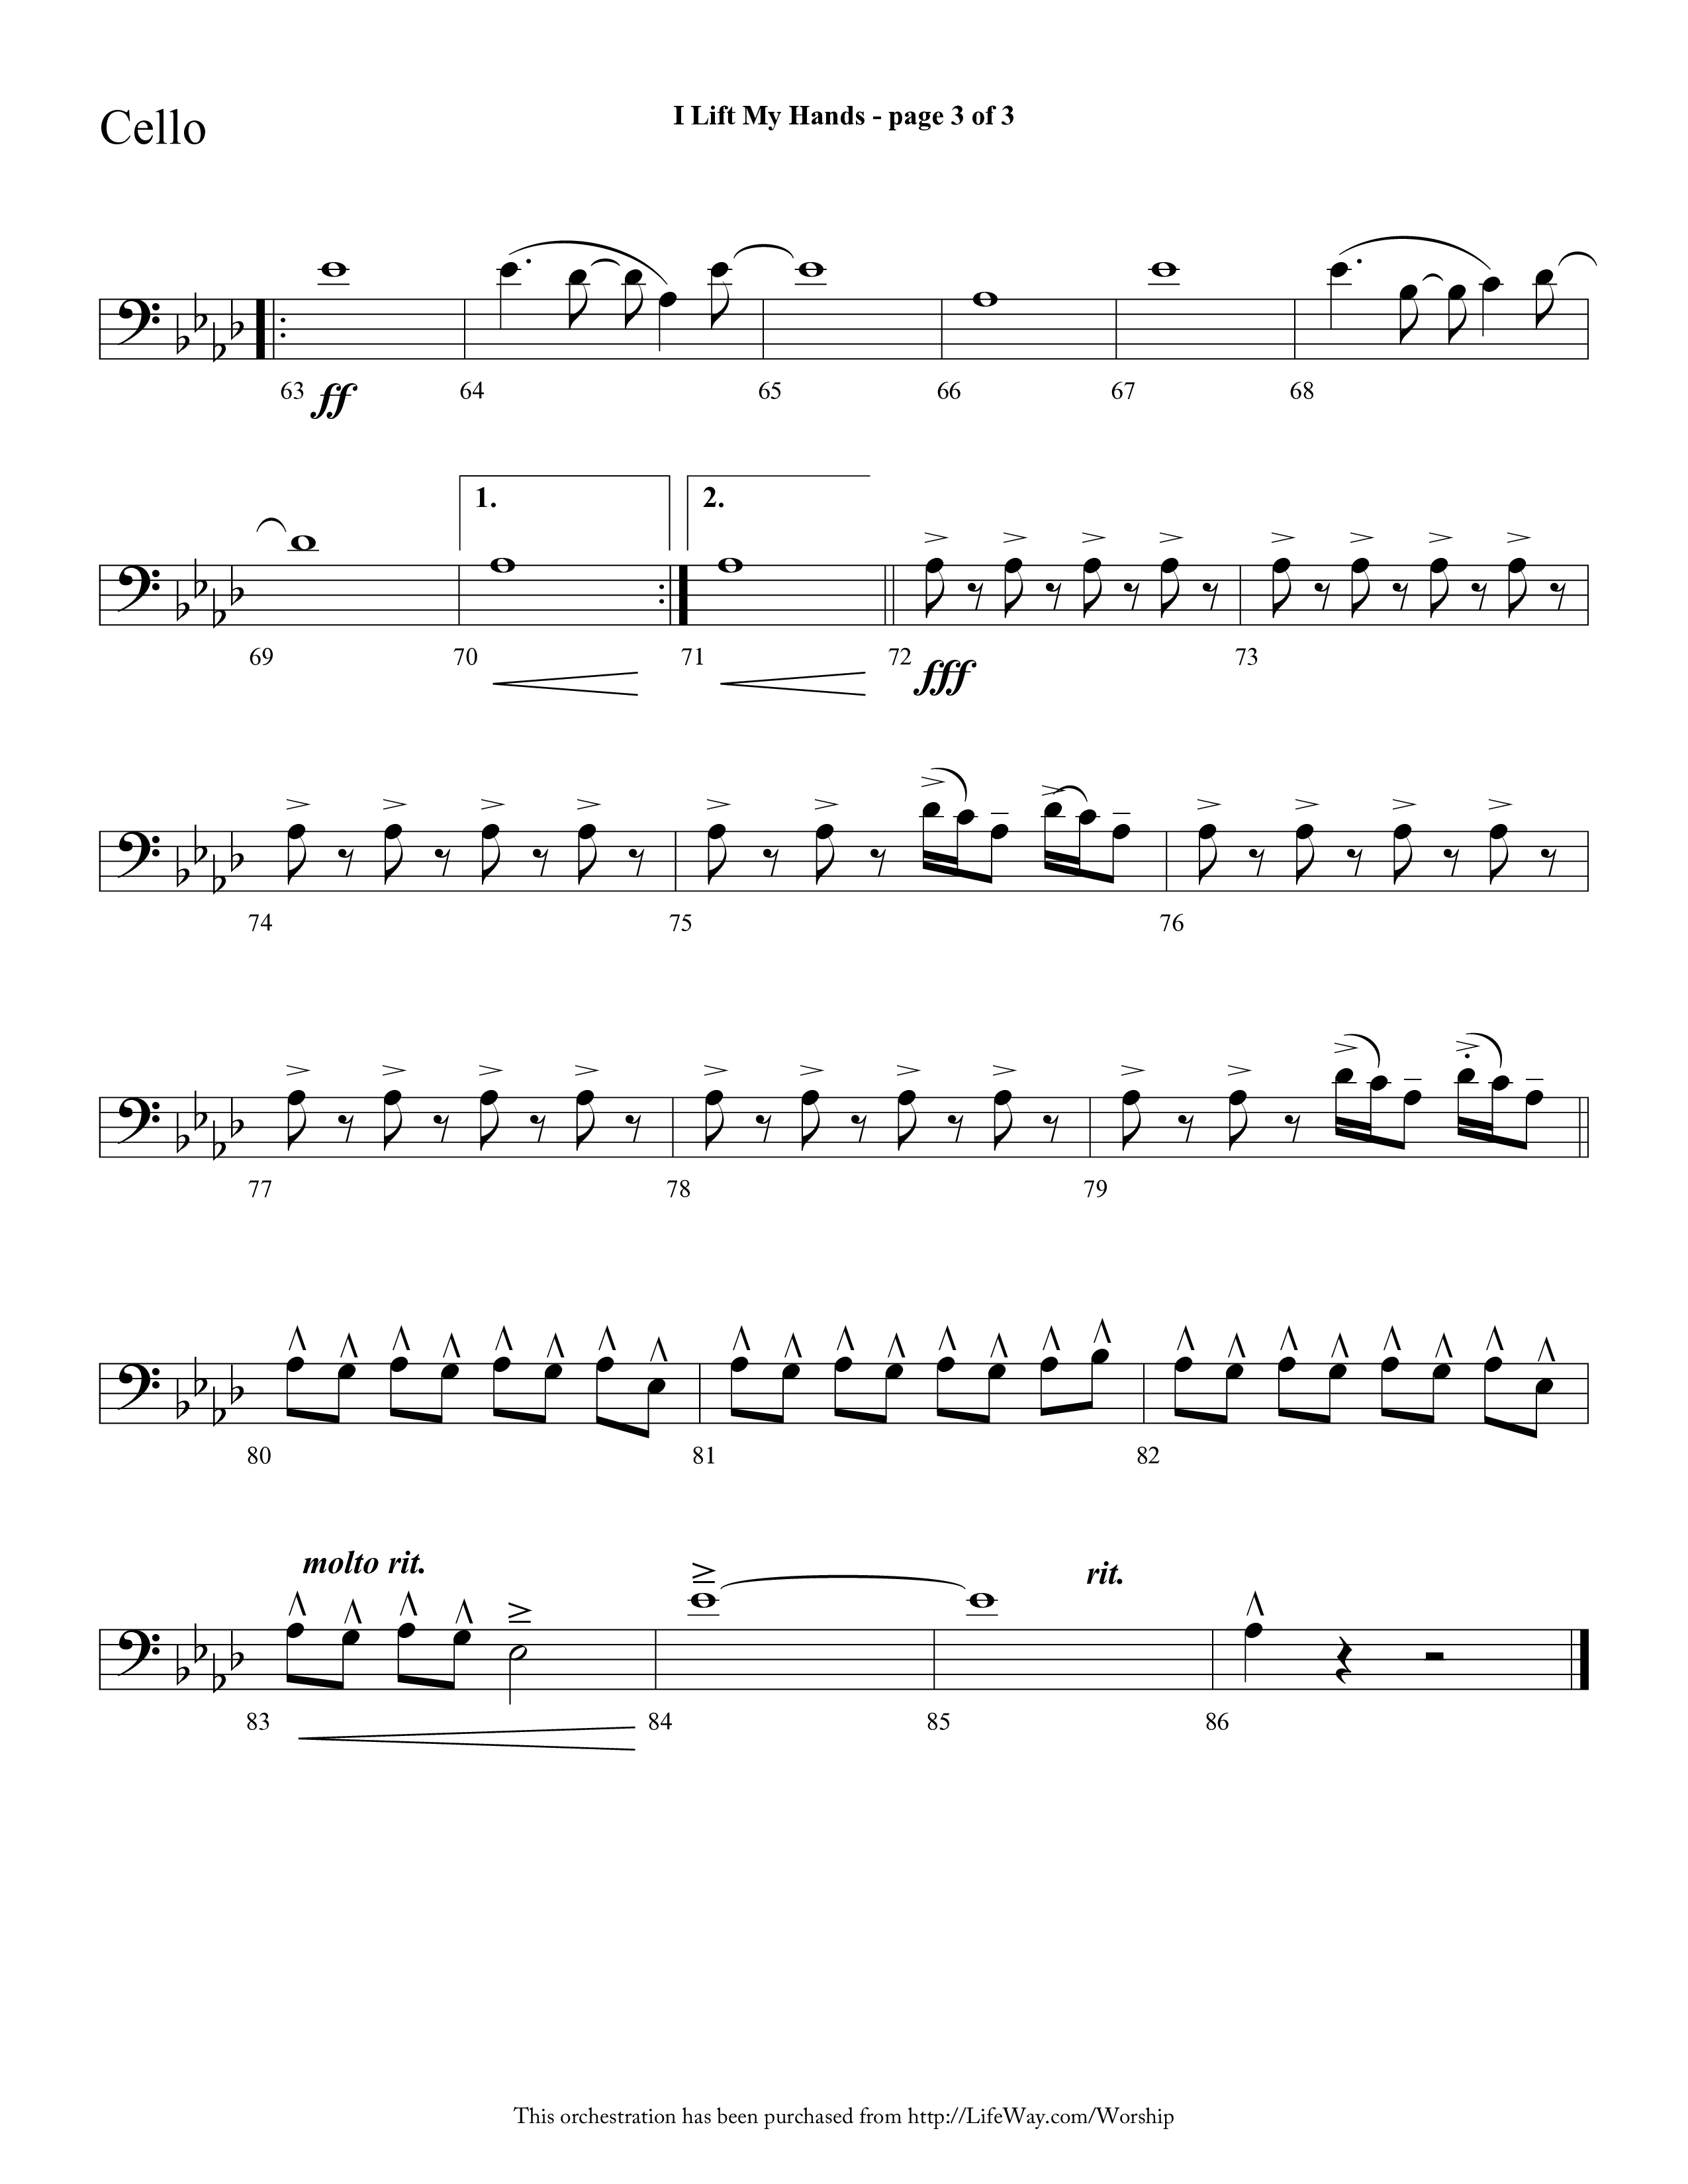 I Lift My Hands (Choral Anthem SATB) Cello (Lifeway Choral / Arr. Cliff Duren)